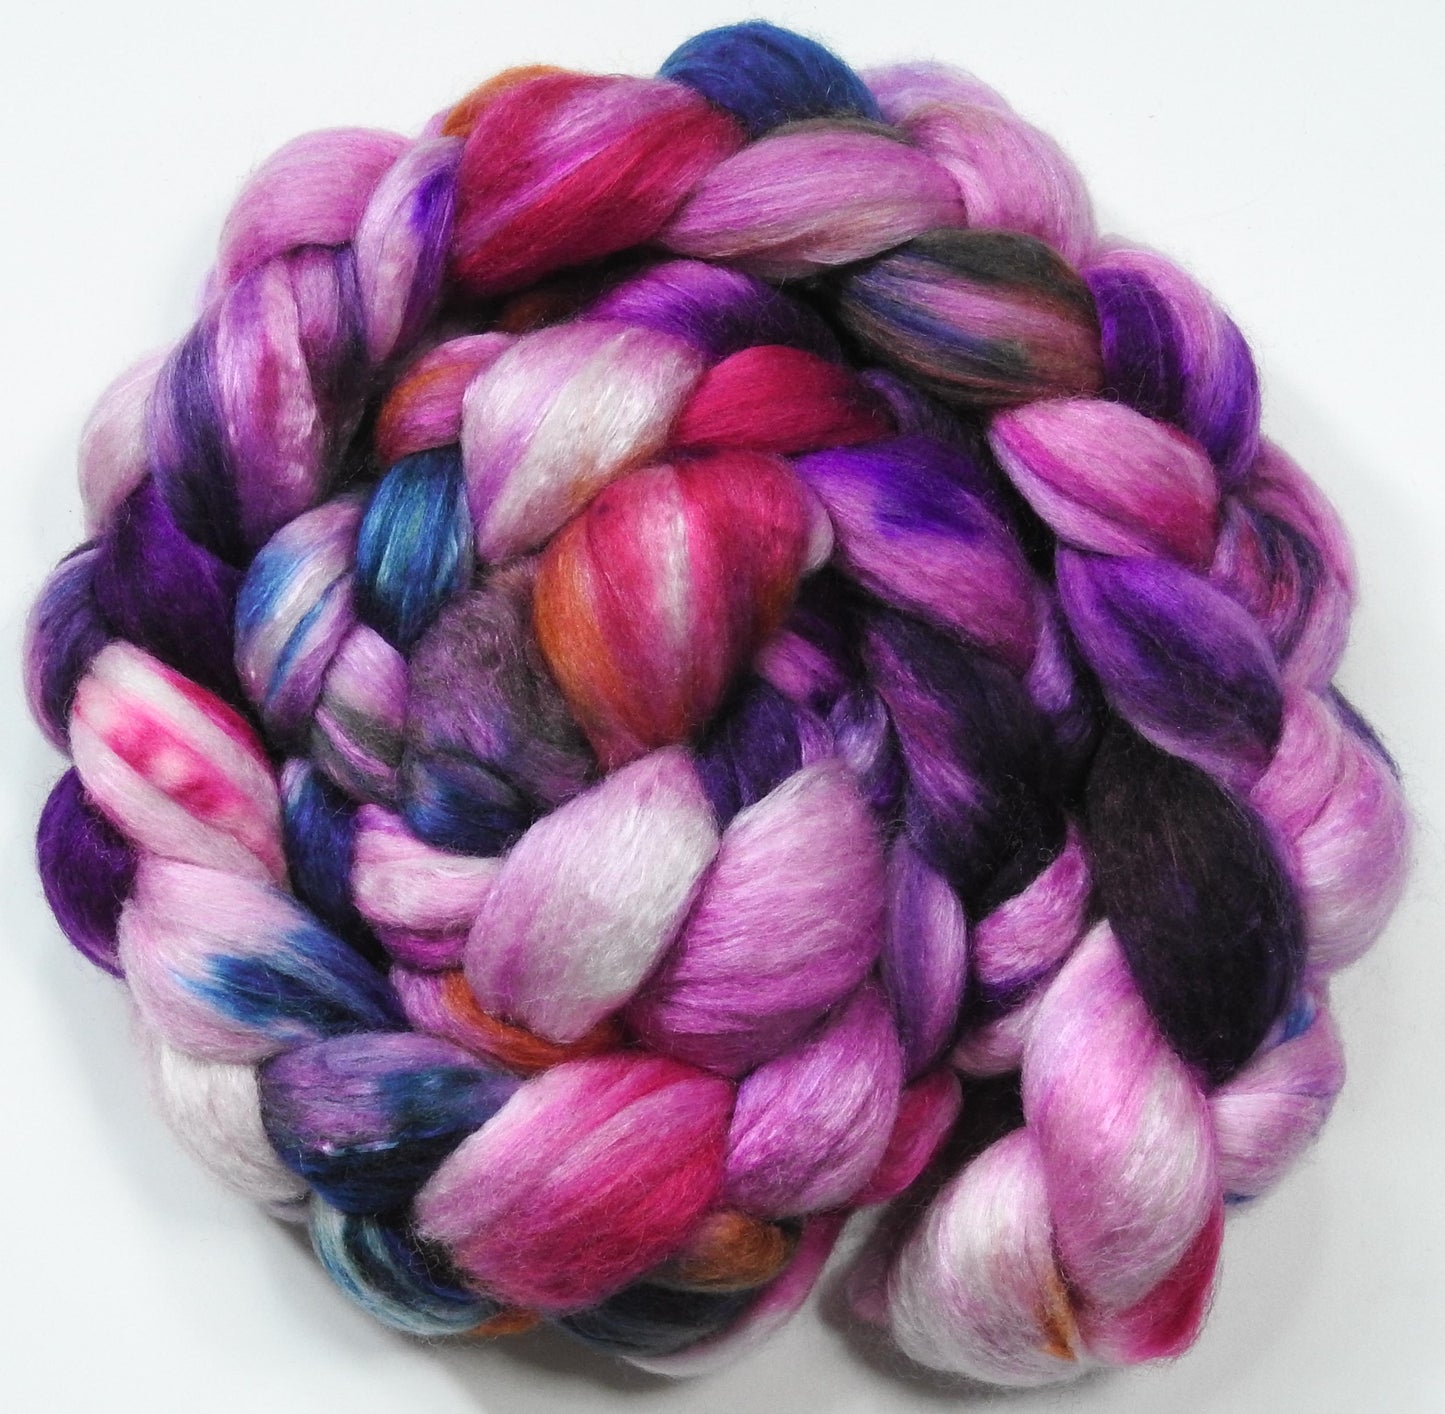 Petunia Redux - Batt in a Braid #54- Bleached YAK/Polwarth / Mulberry Silk (40/40/20)